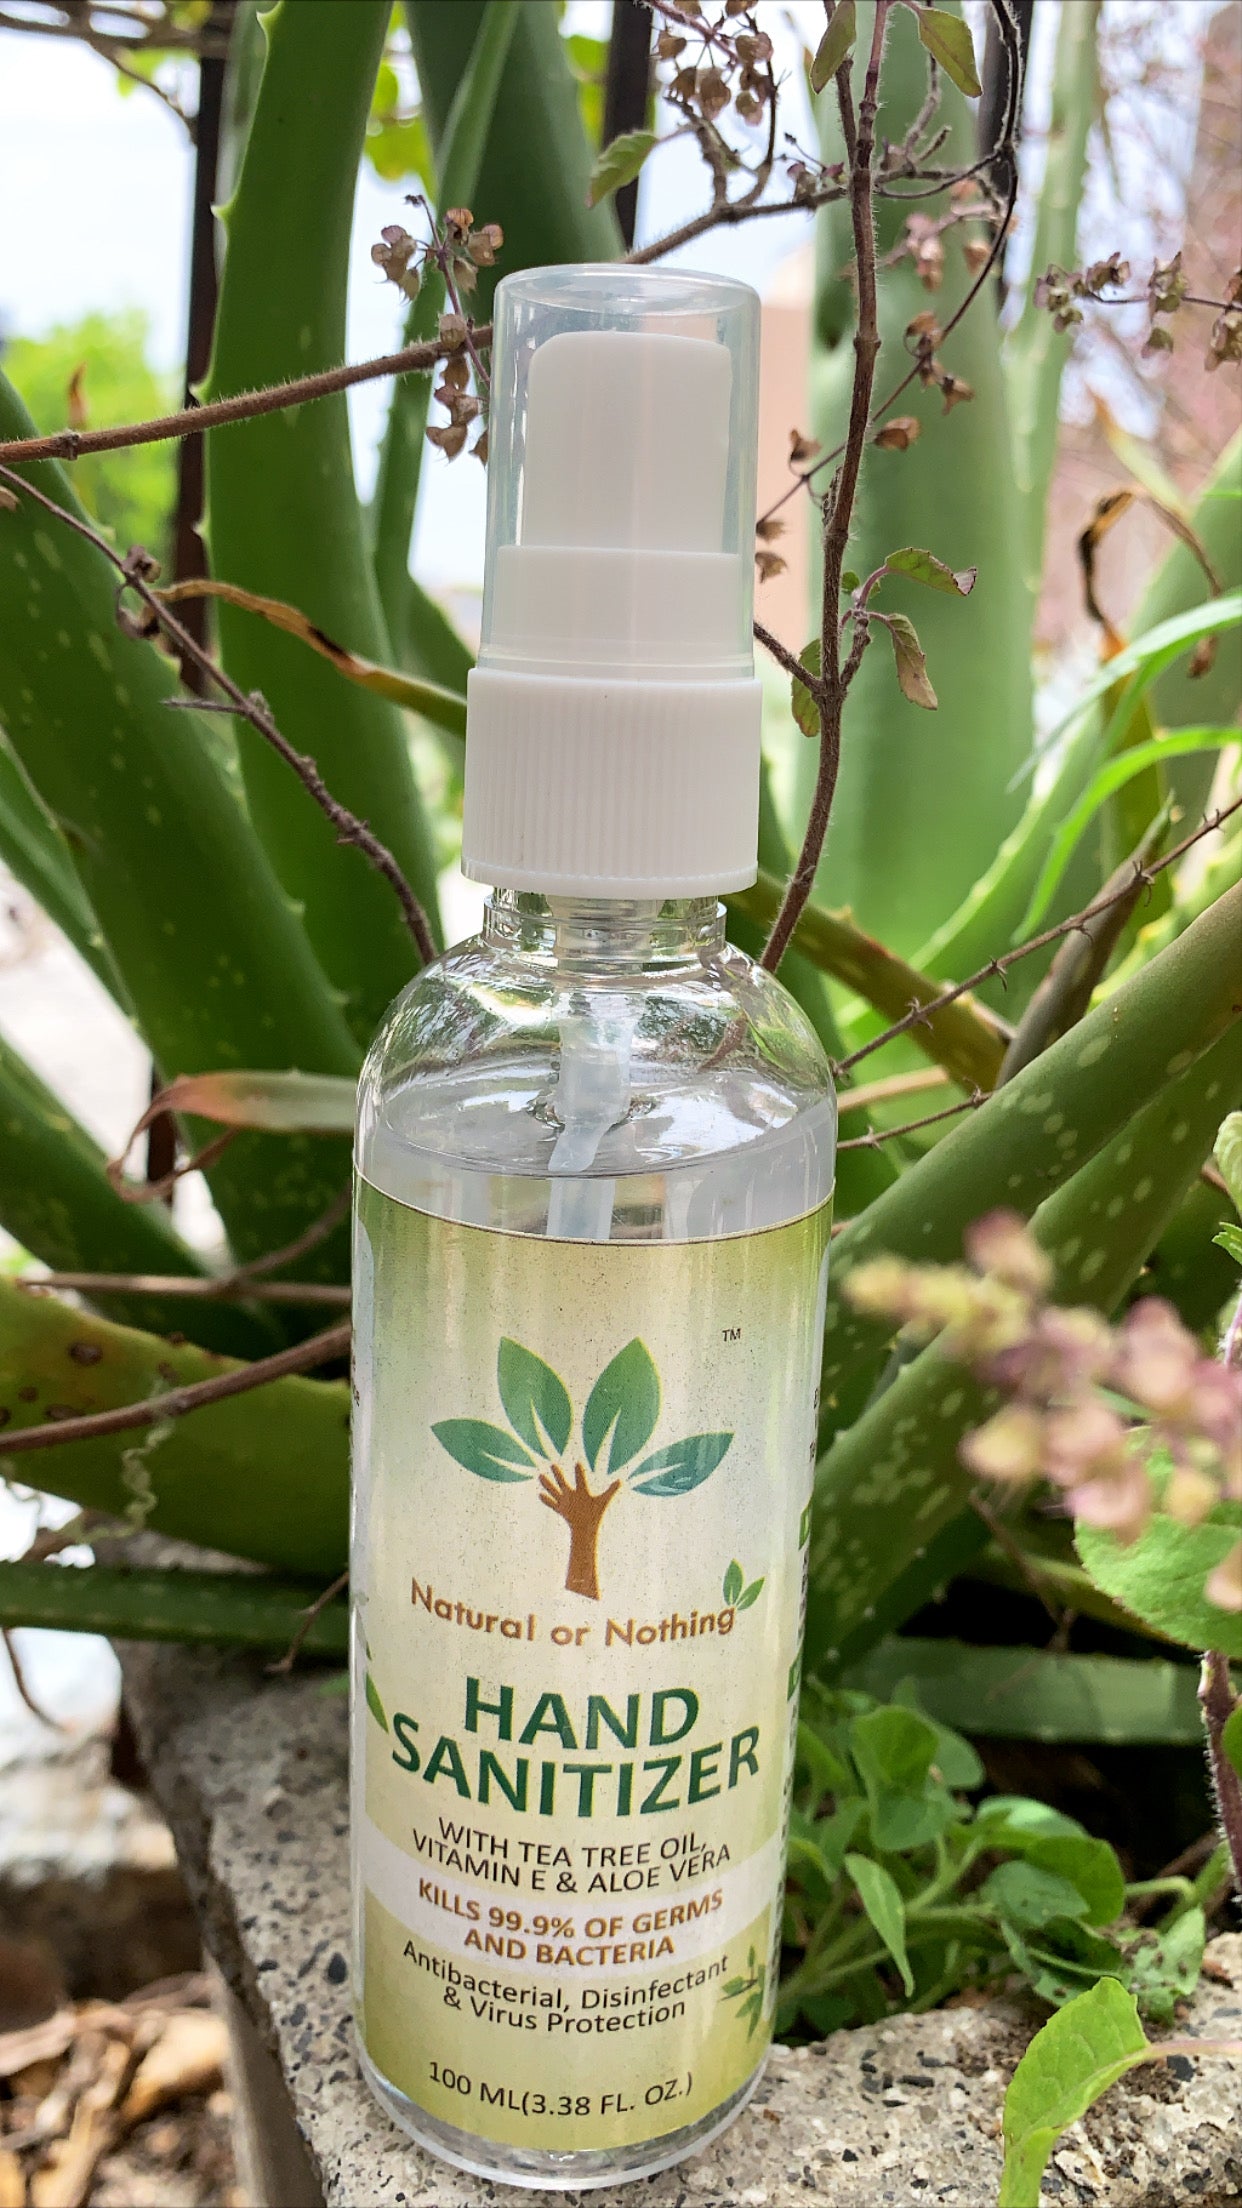 Milk Thistle Seeds for Boosting Immune System - 300 Grams (60 Servings) + 100 ML Bottle of Herbal Hand Sanitizer Free (Stay Safe)